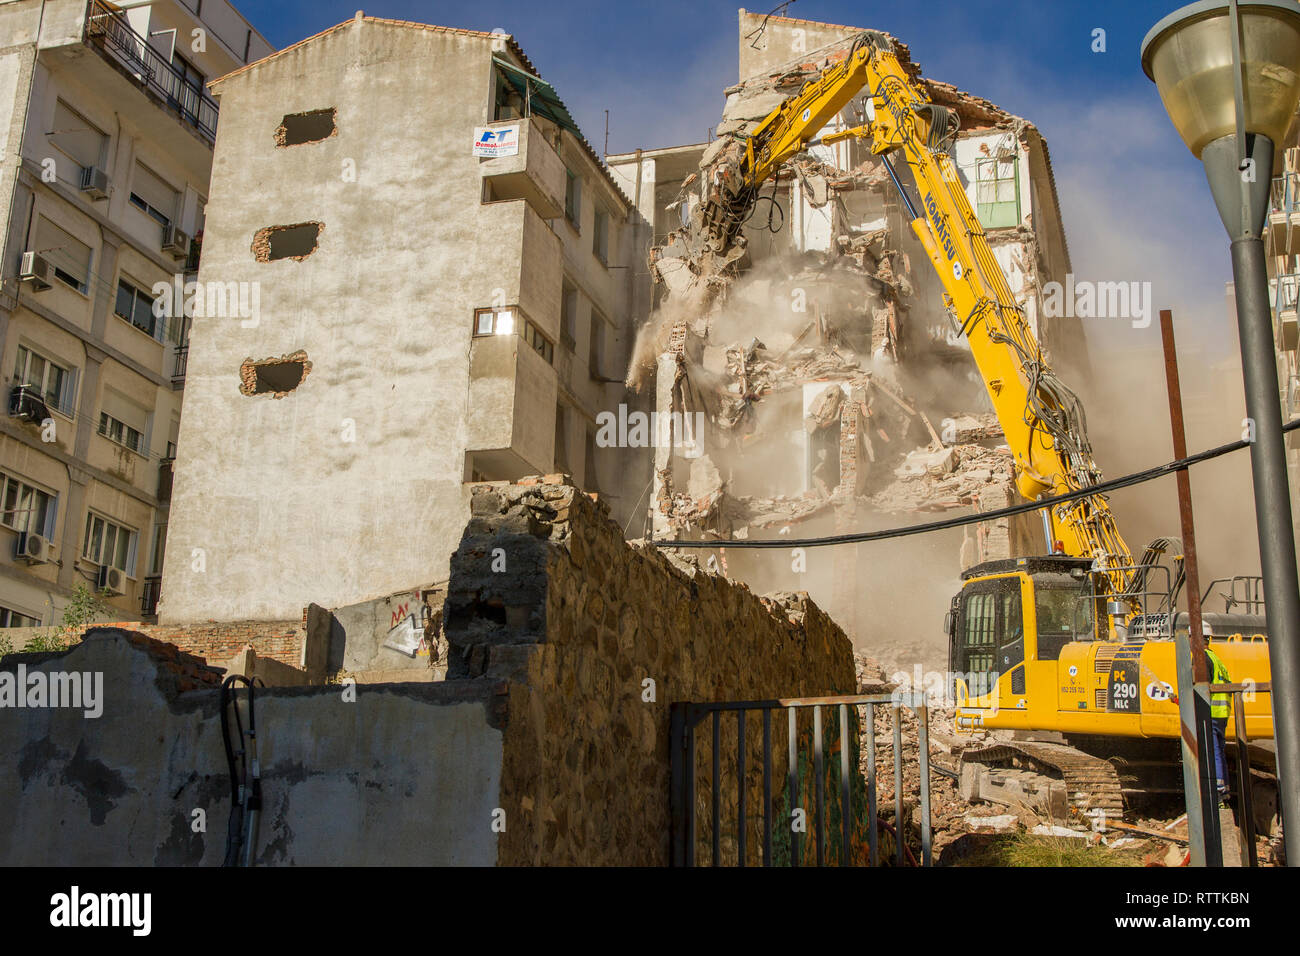 High Reach Demolition Komatsu Foto Stock